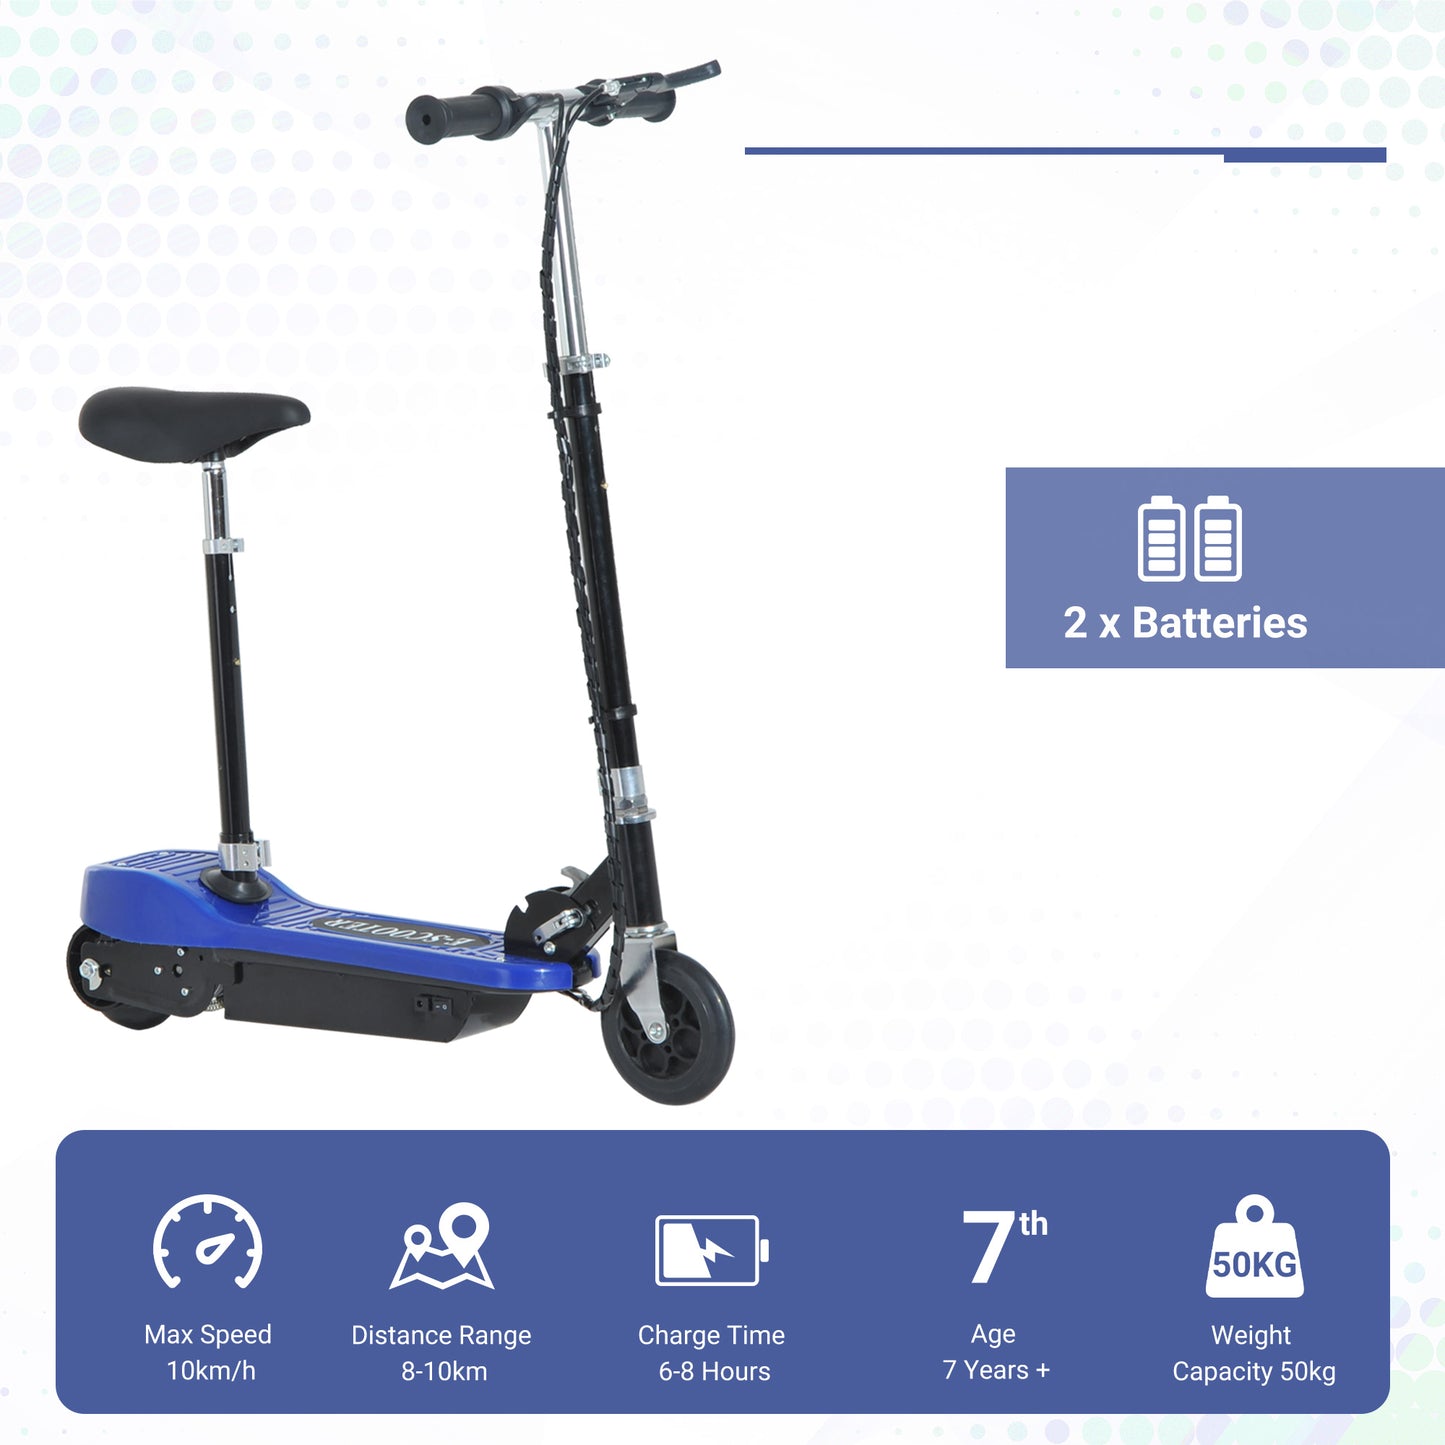 HOMCOM Foldable Electric Scooter for Kids 12V 120W W/Brake Kickstand -Blue